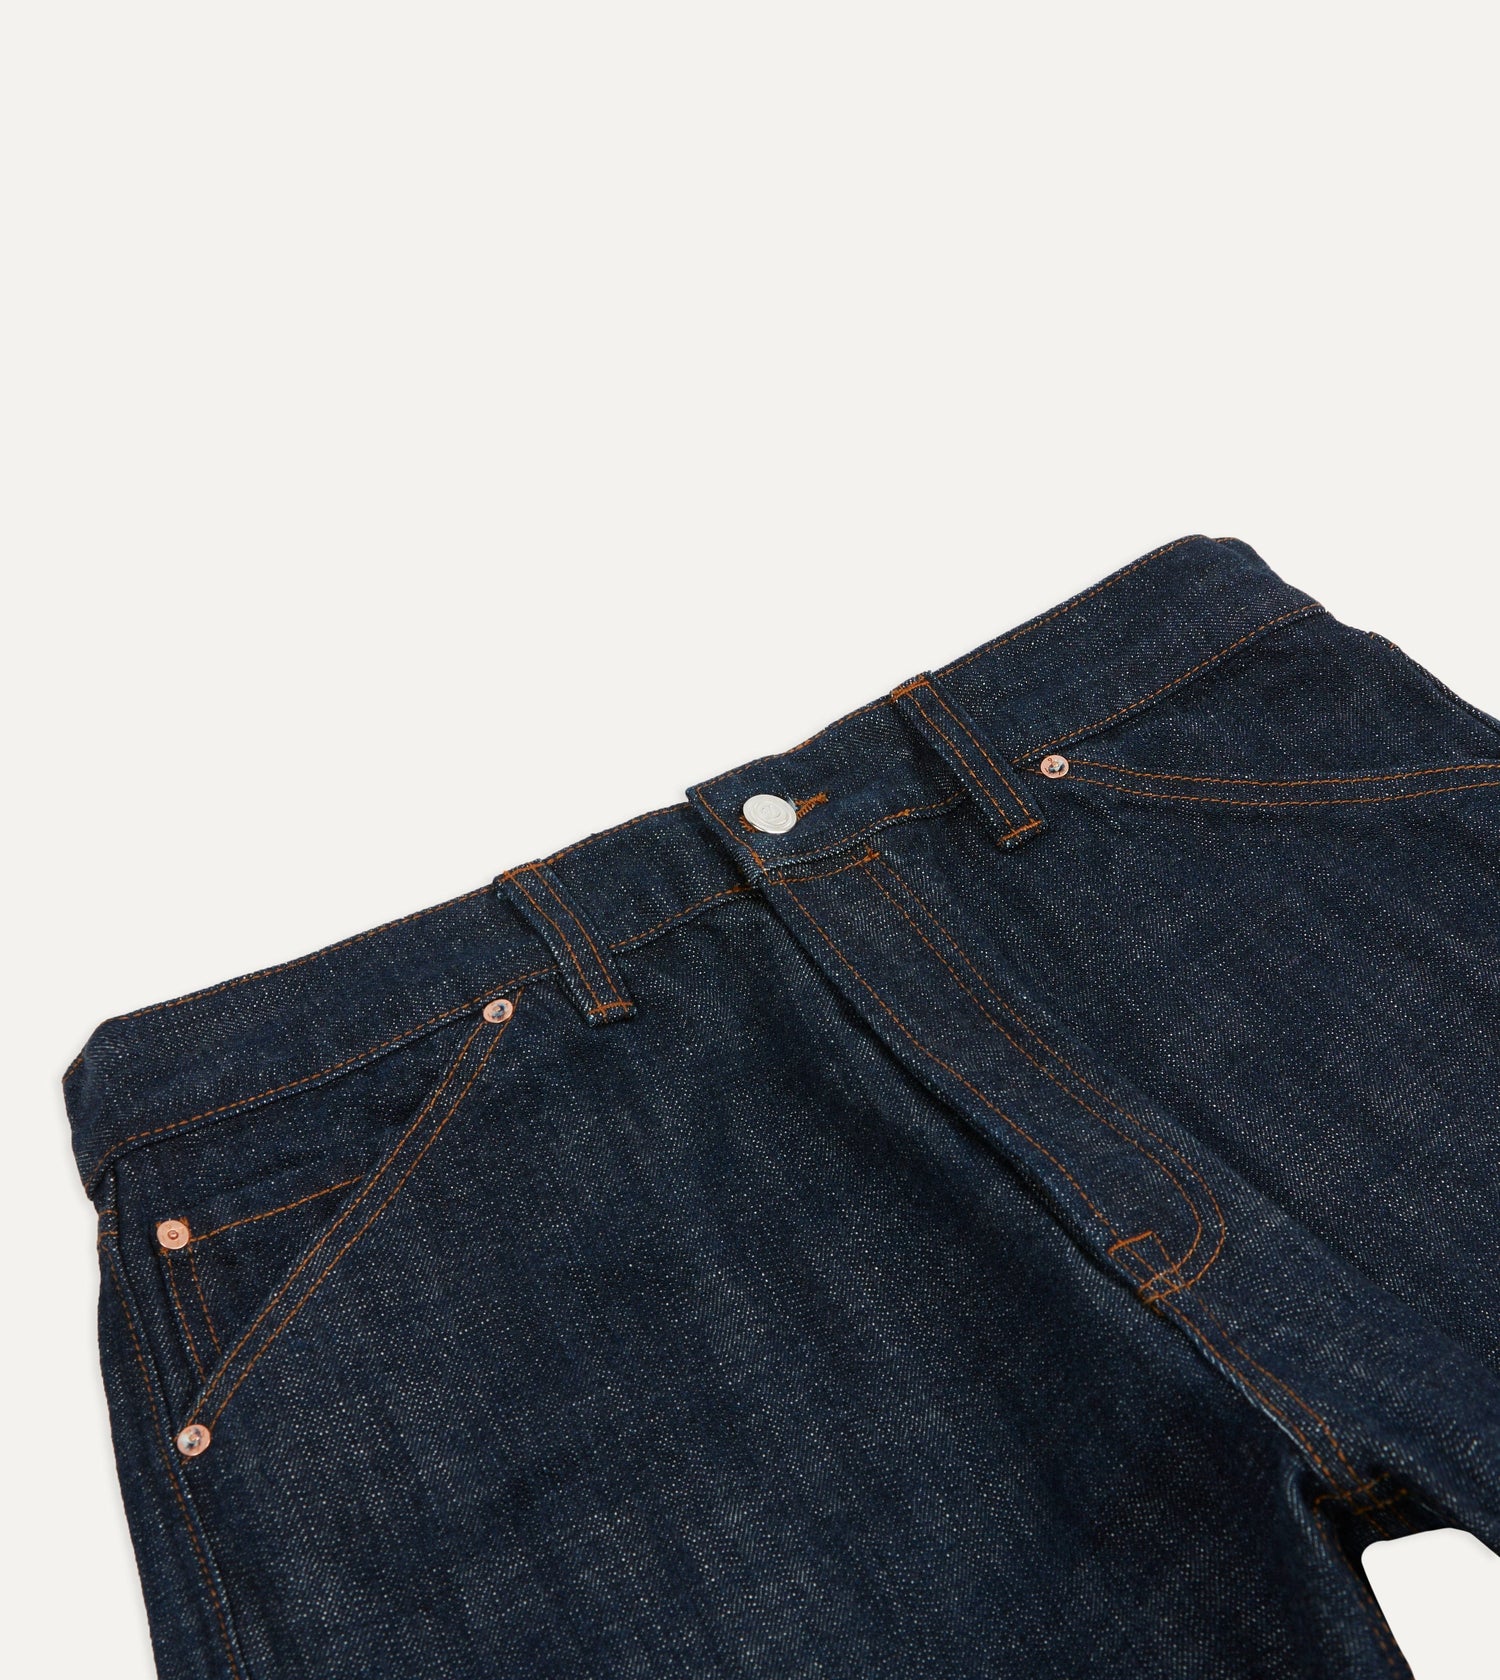 Indigo Rinse 15.5oz Japanese Selvedge Denim Five-Pocket Jeans